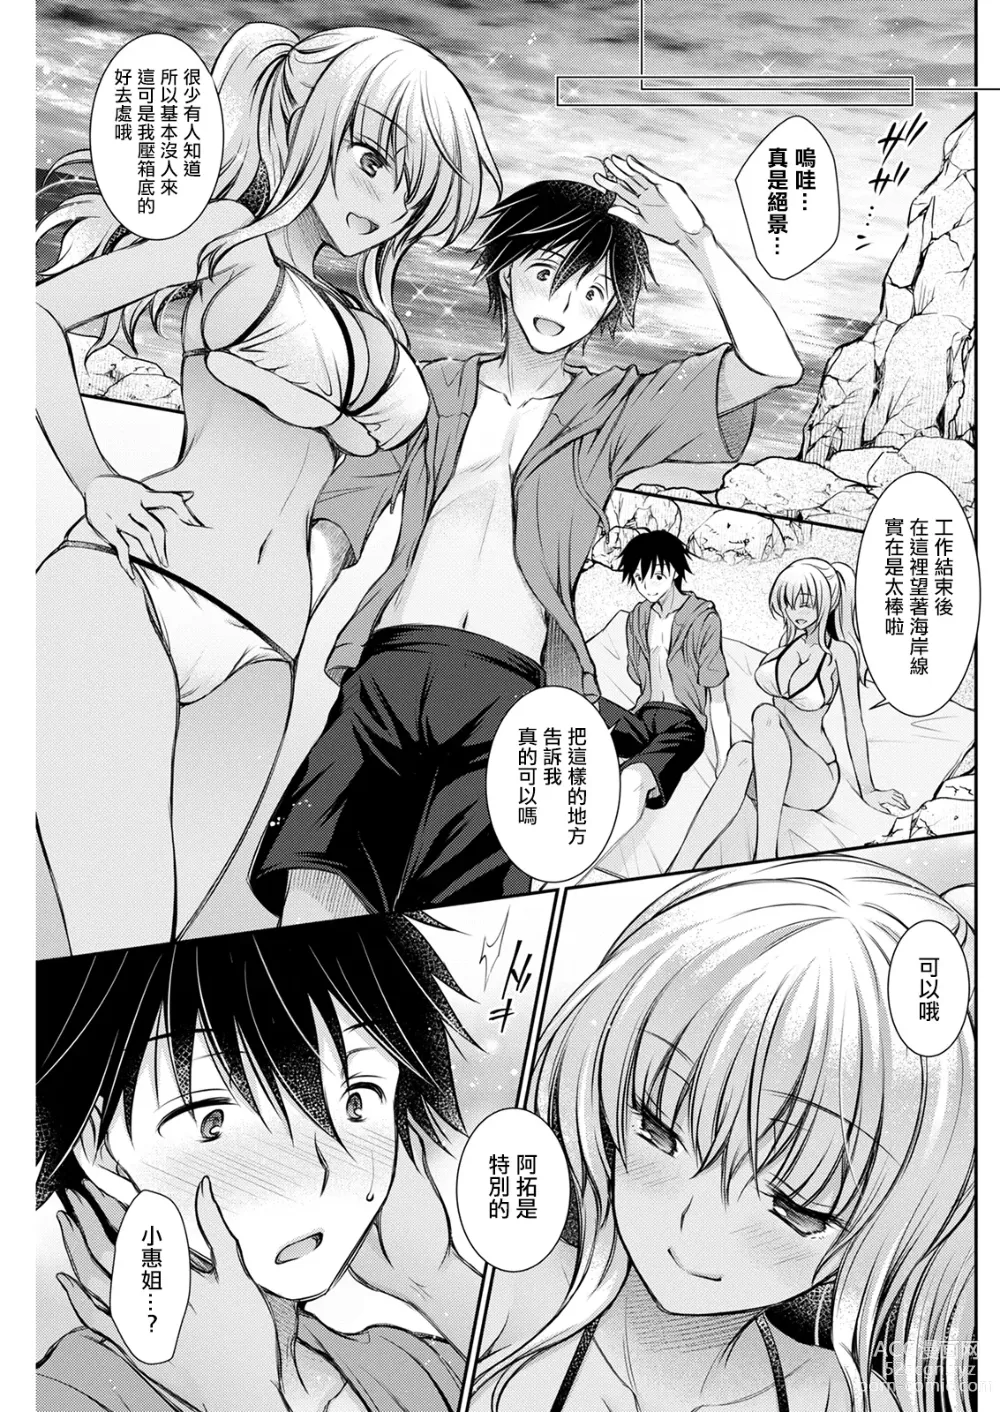 Page 5 of manga Umi no Yeah!!